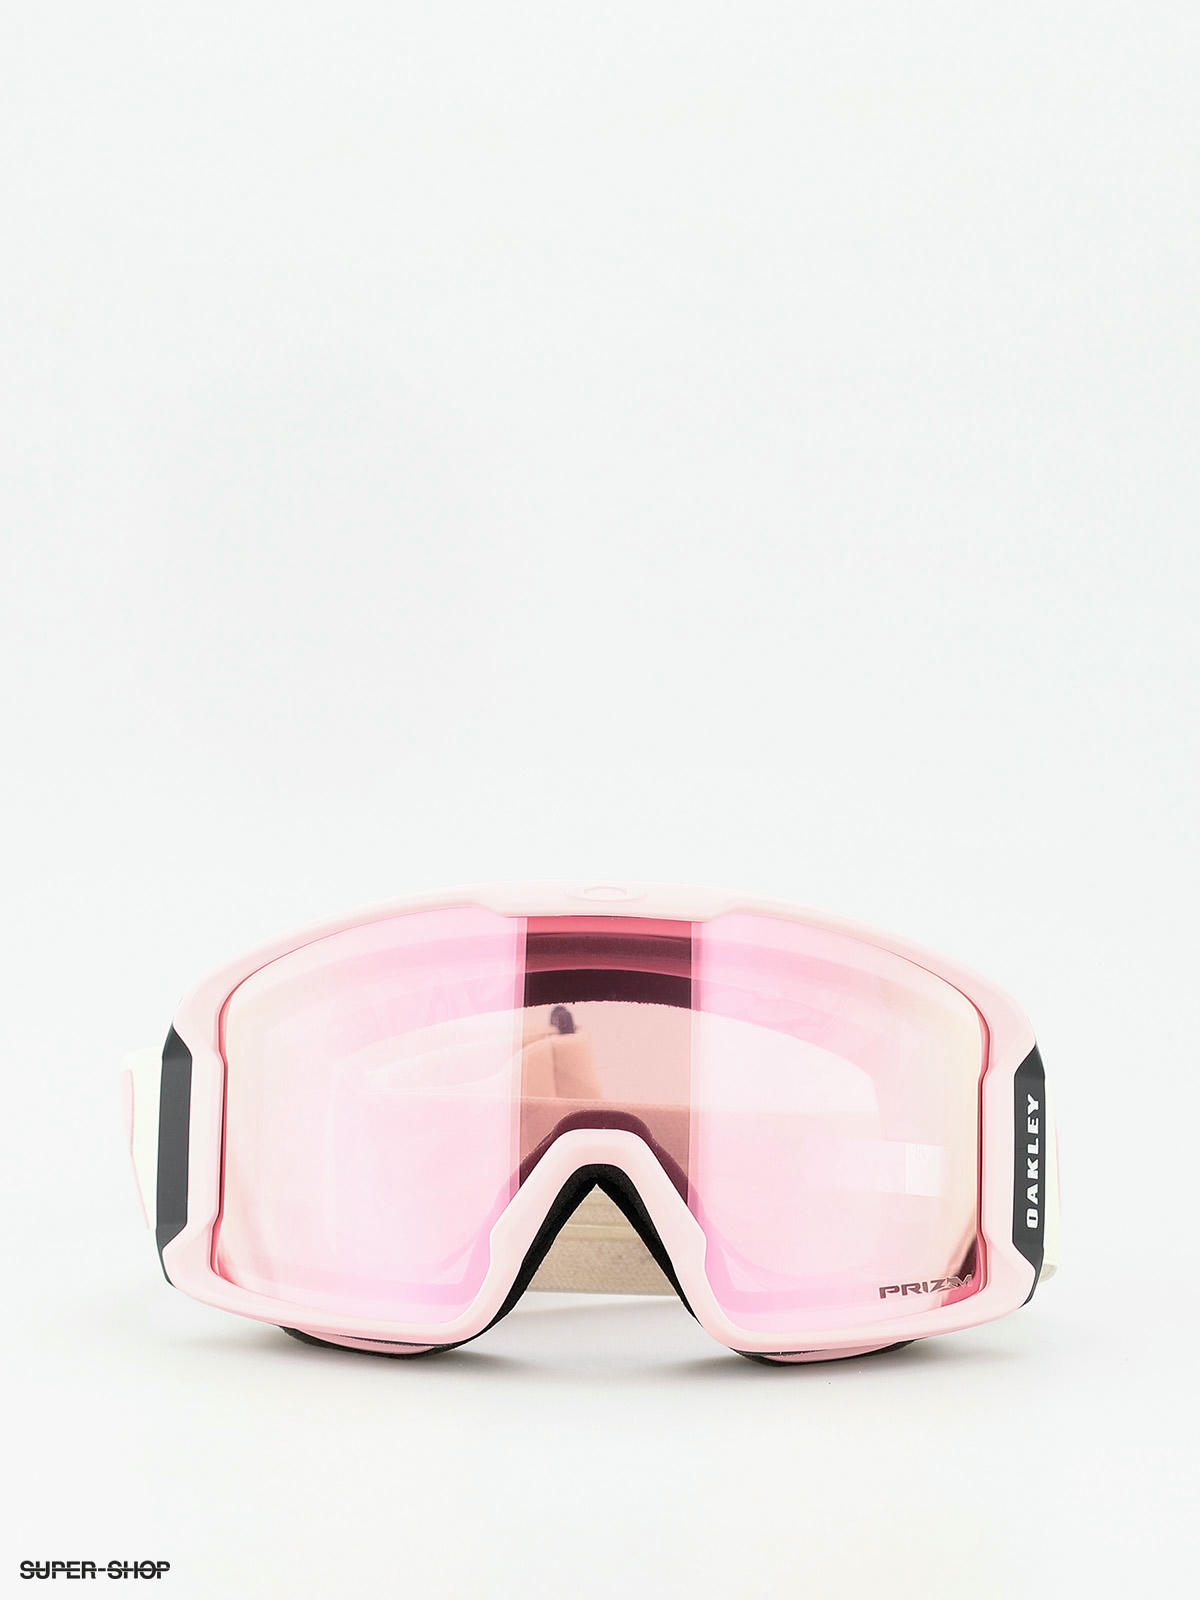 oakley pink prizm goggles